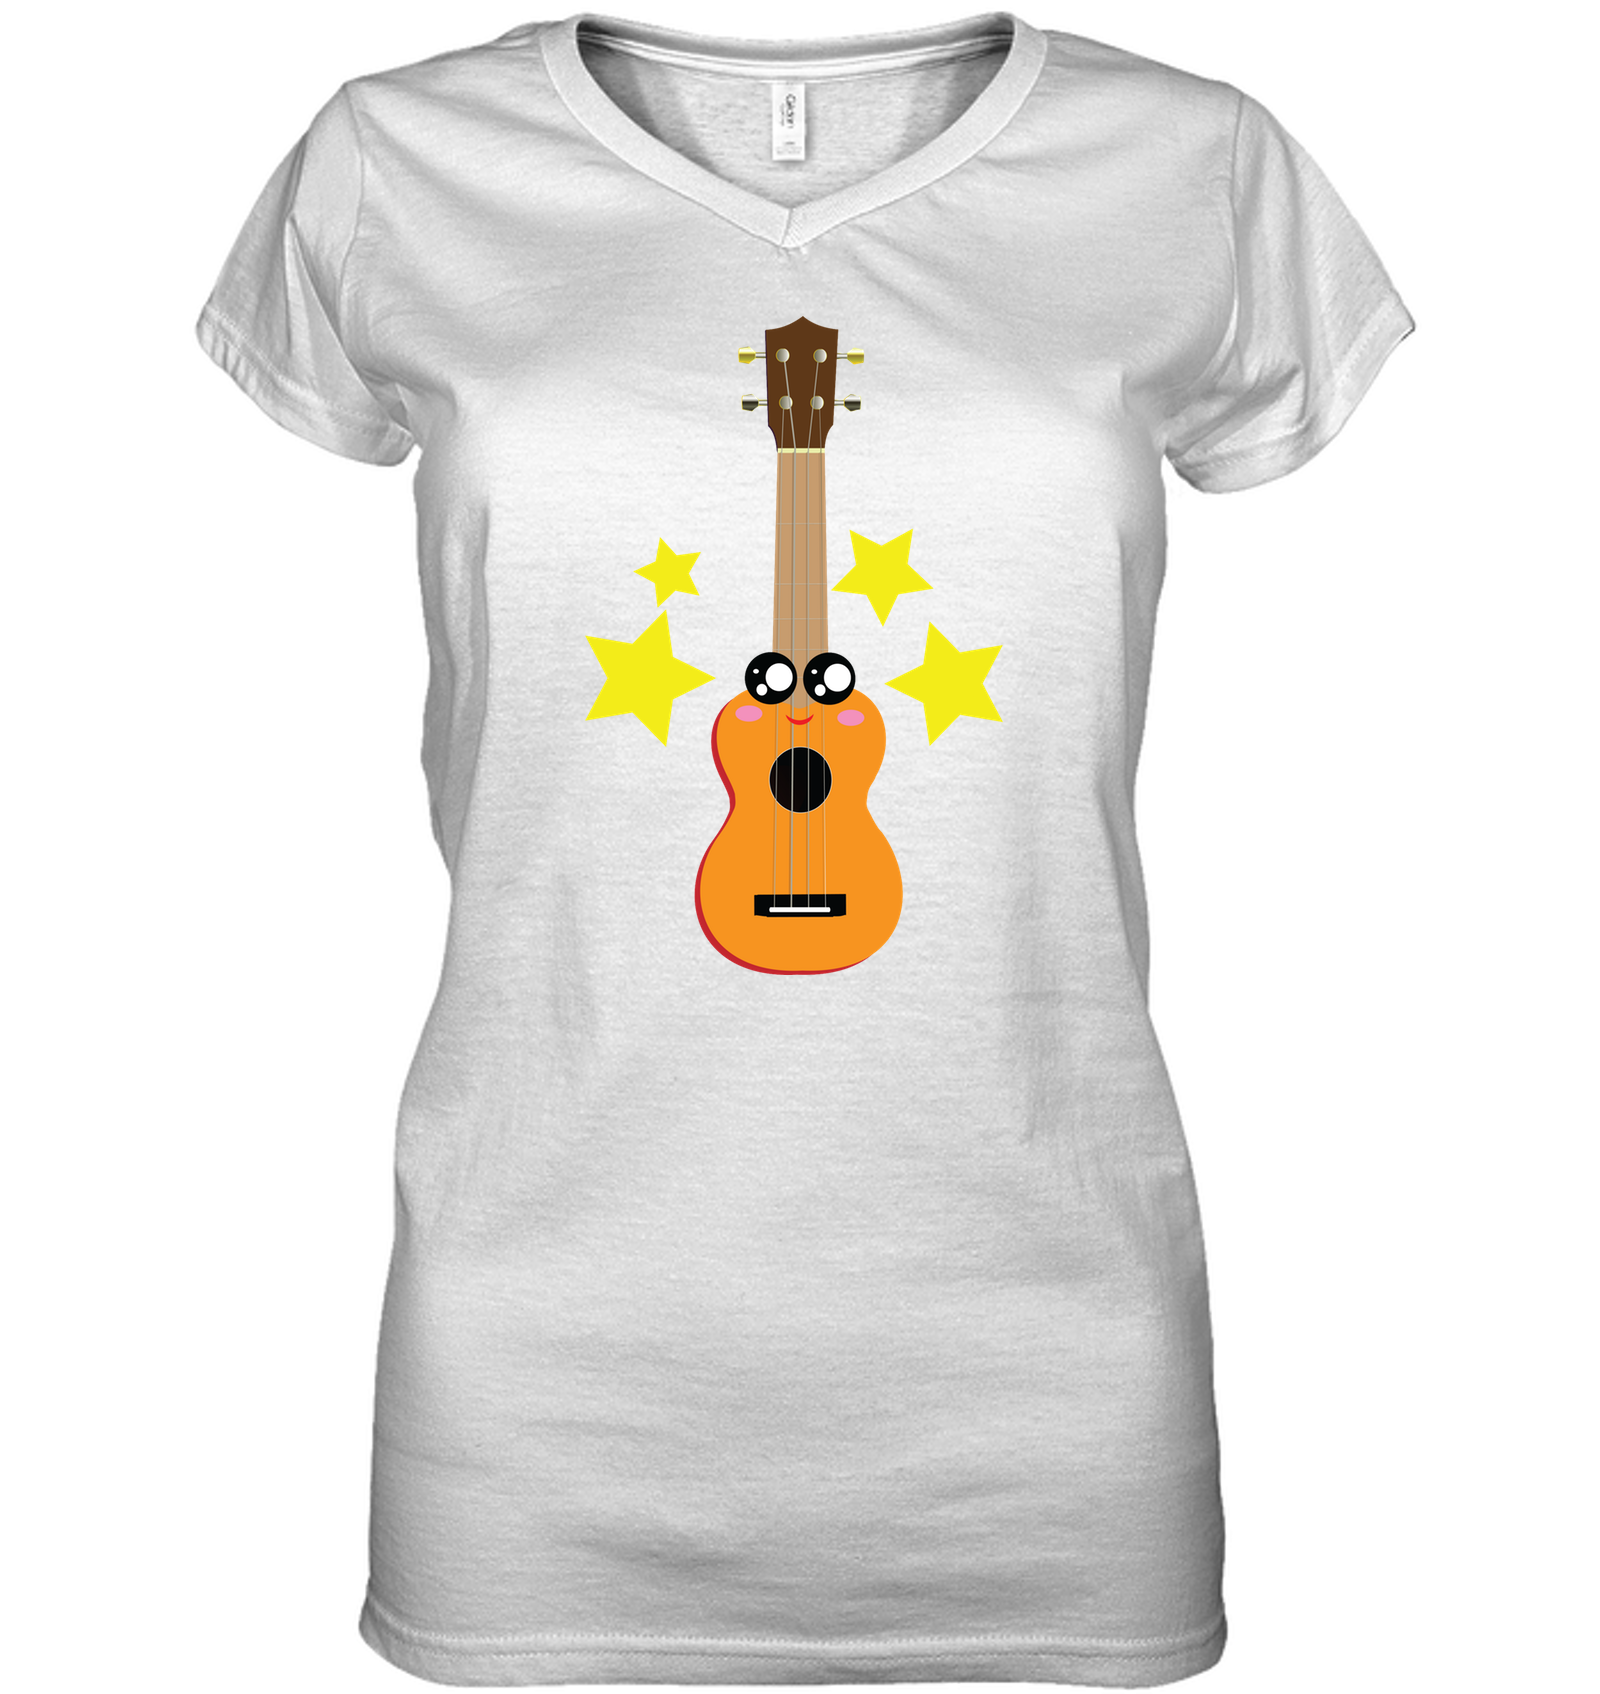 Cute Guitar - Hanes Women's Nano-T® V-Neck T-Shirt